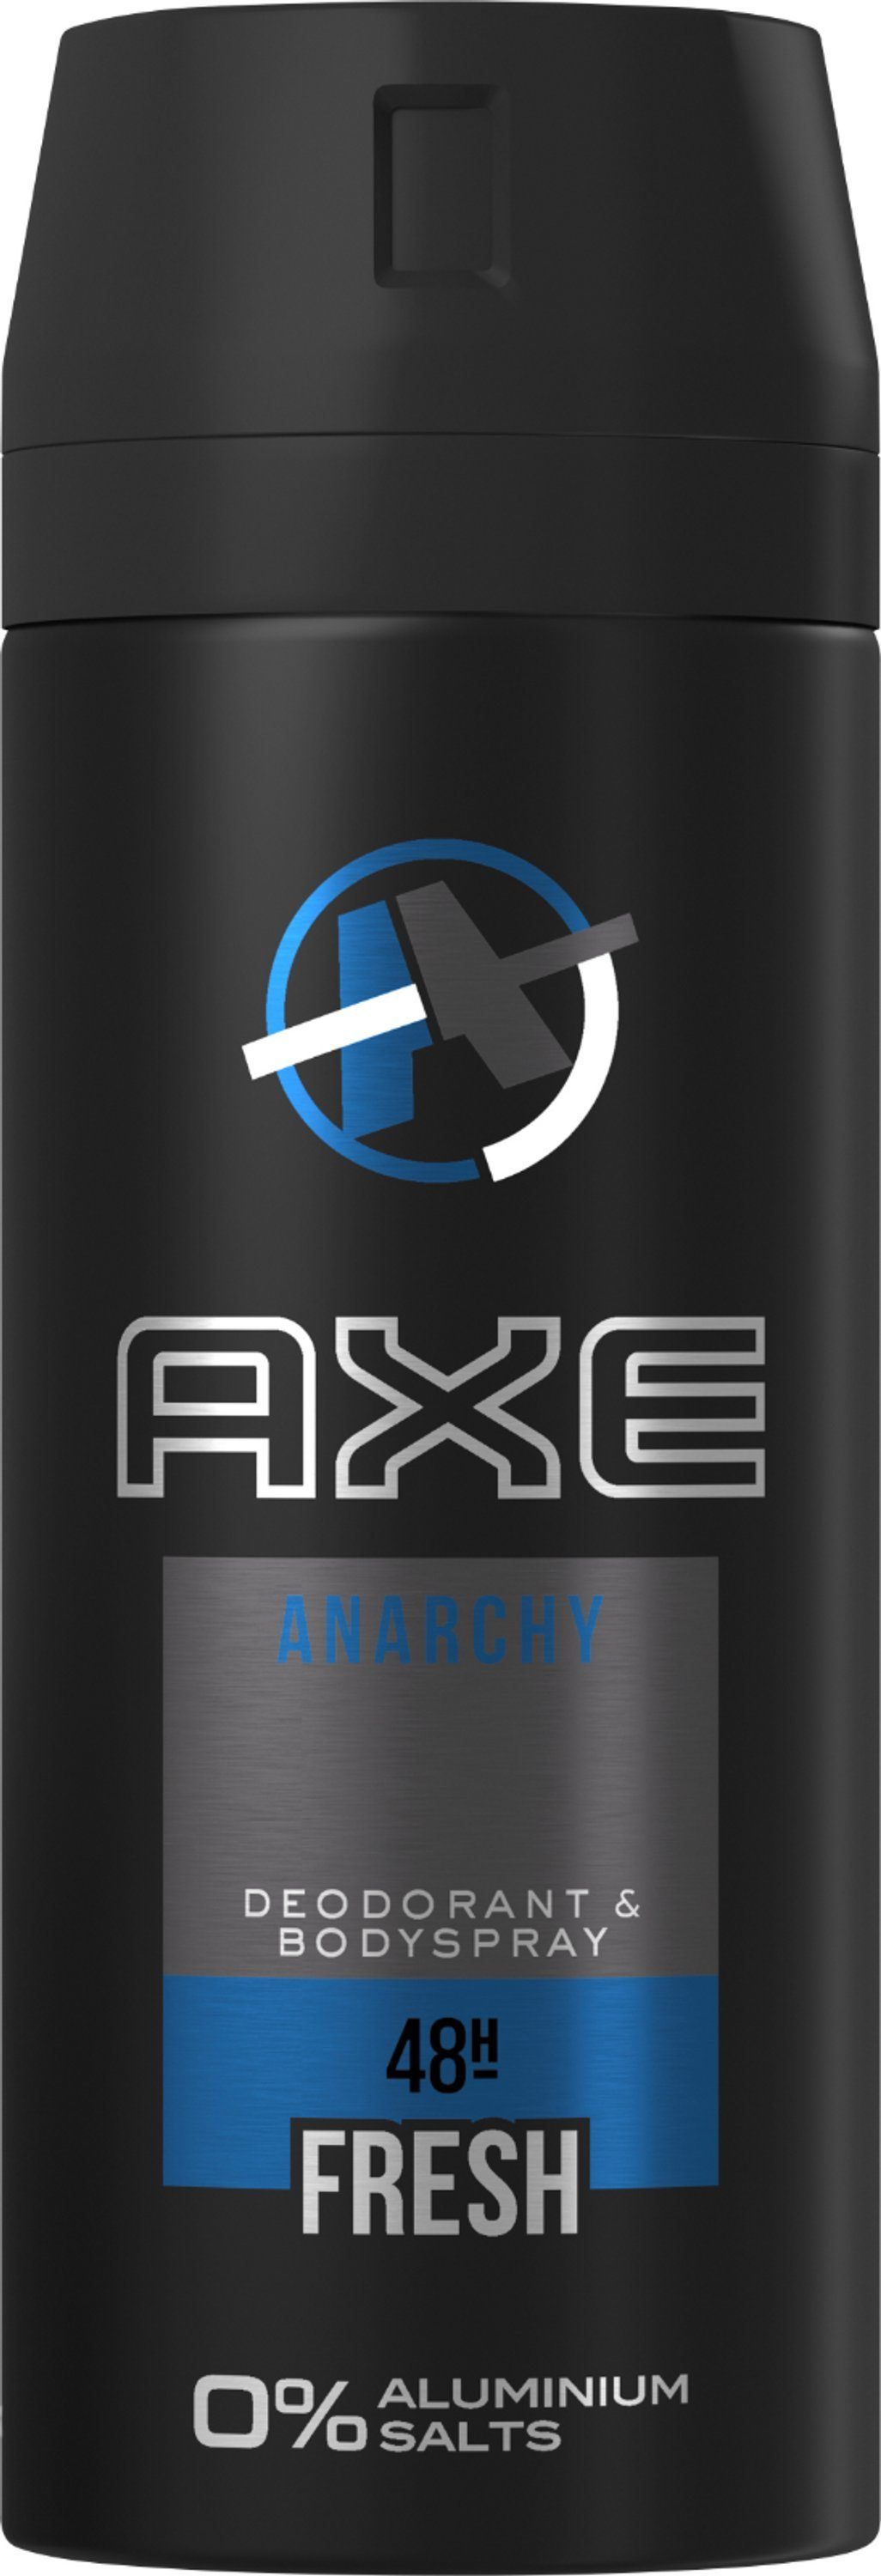 for Deo-Set Him 12x Deodorant Anarchy Bodyspray Aluminiumsalze ohne Deo axe 150ml